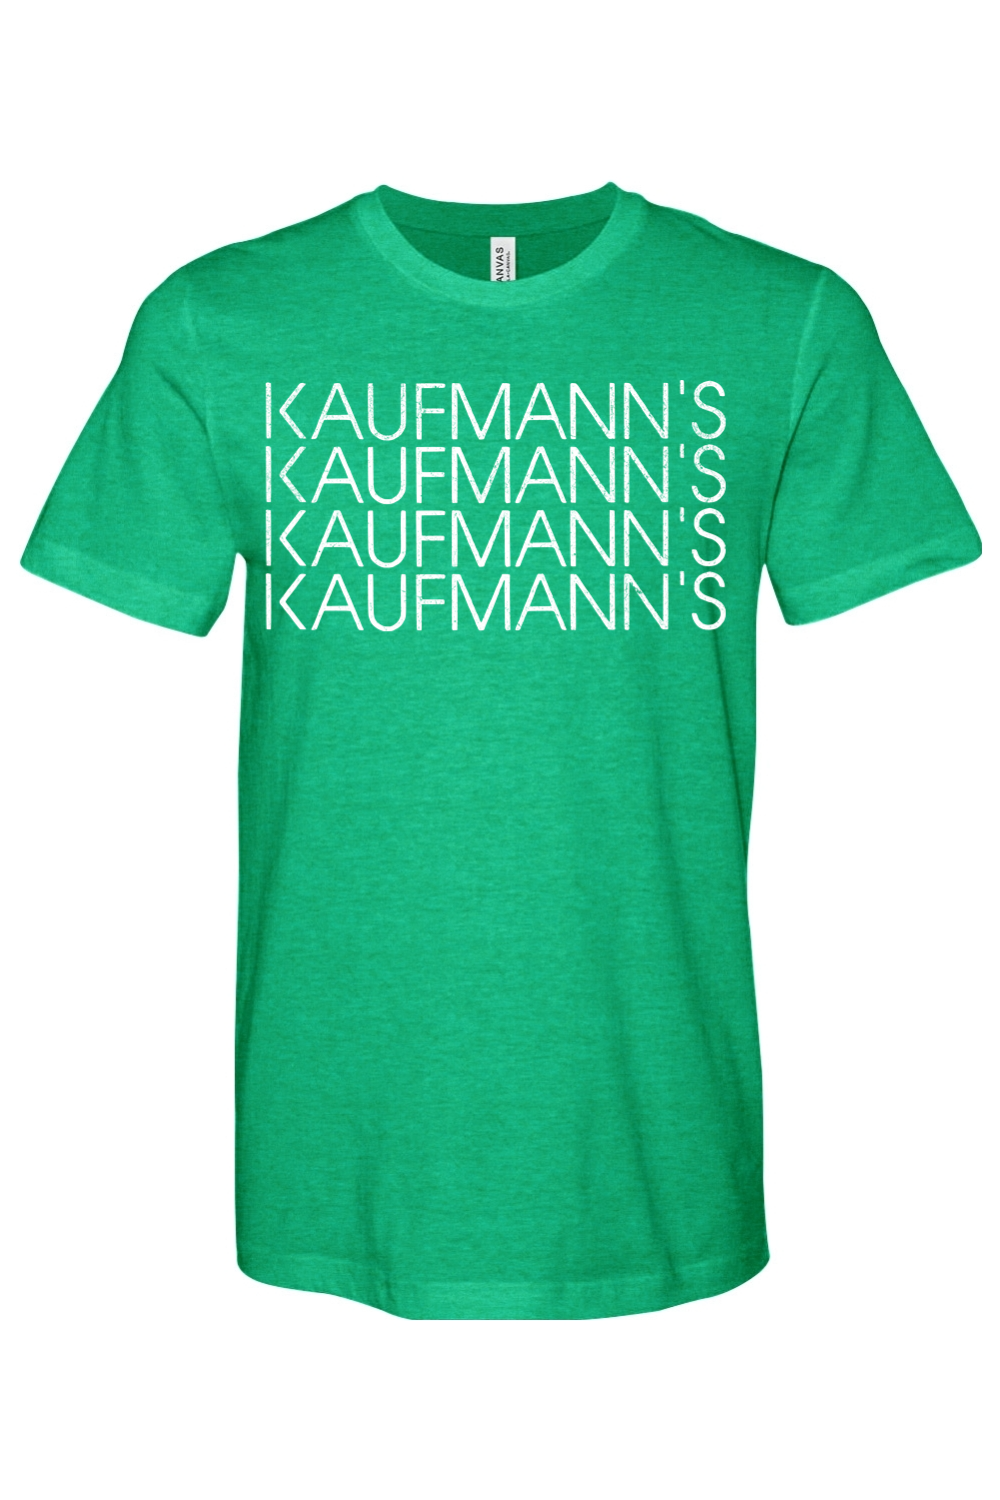 Kaufmann's Department Store - Pittsburgh - Yinzylvania